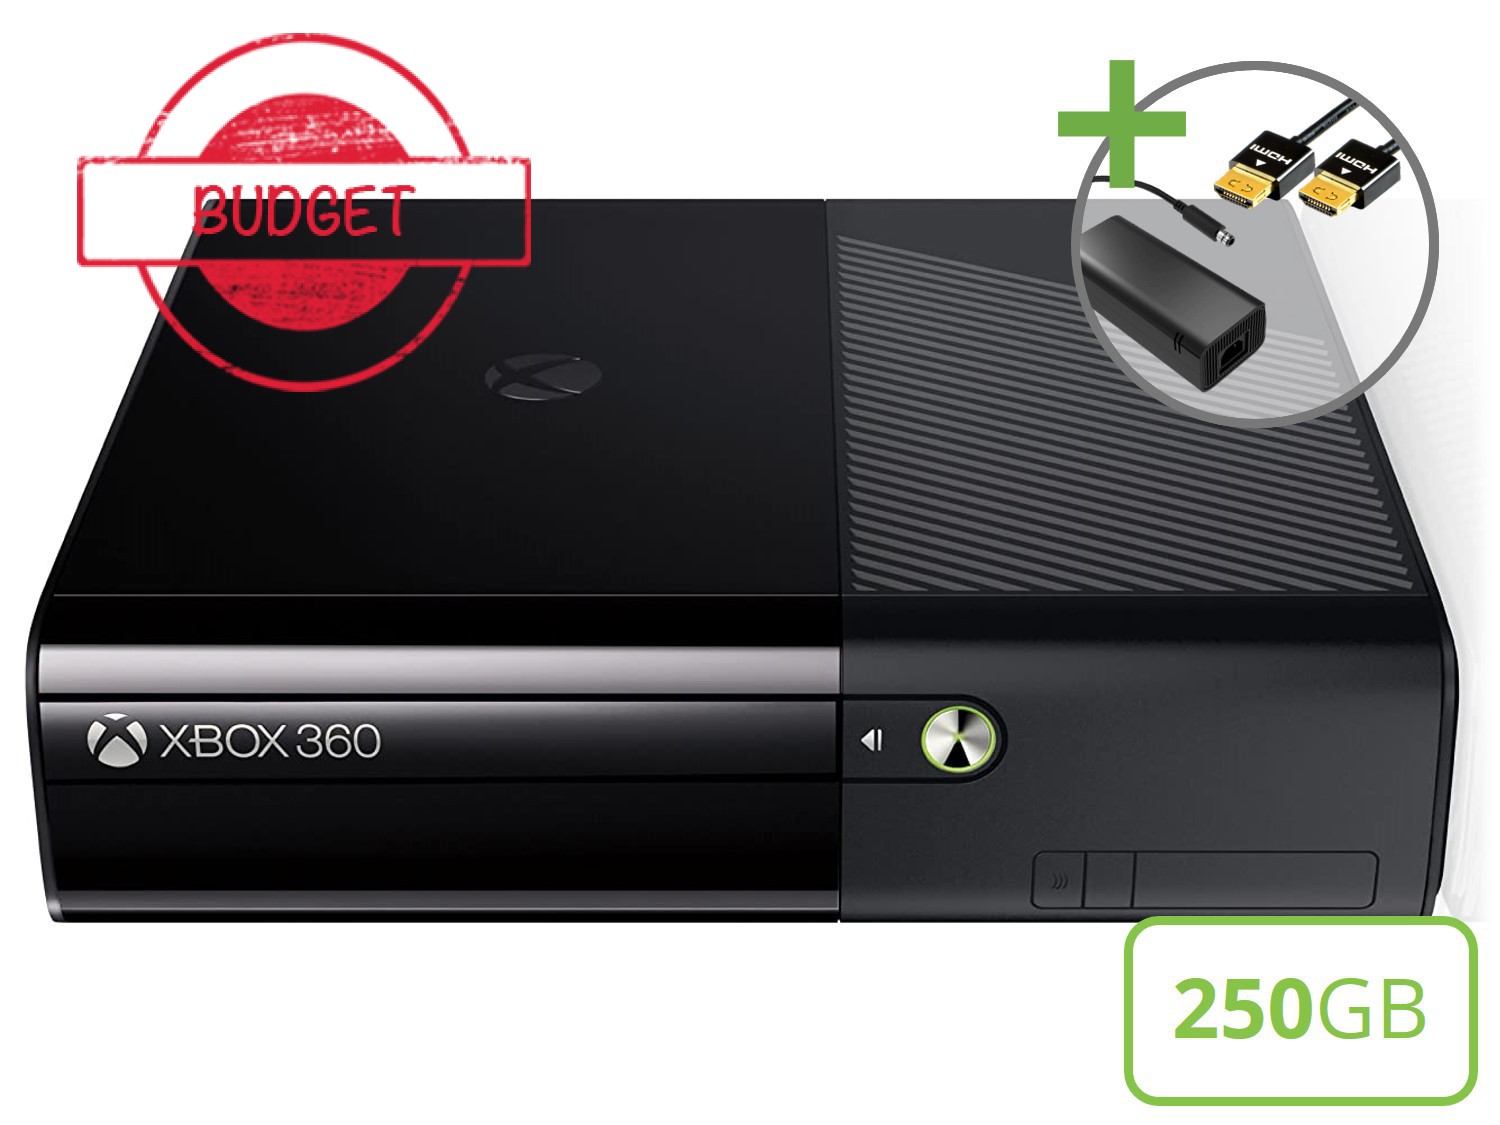 Microsoft Xbox 360 New Slim Starter Pack - 250GB Call of Duty Edition - Budget - Xbox 360 Hardware - 2